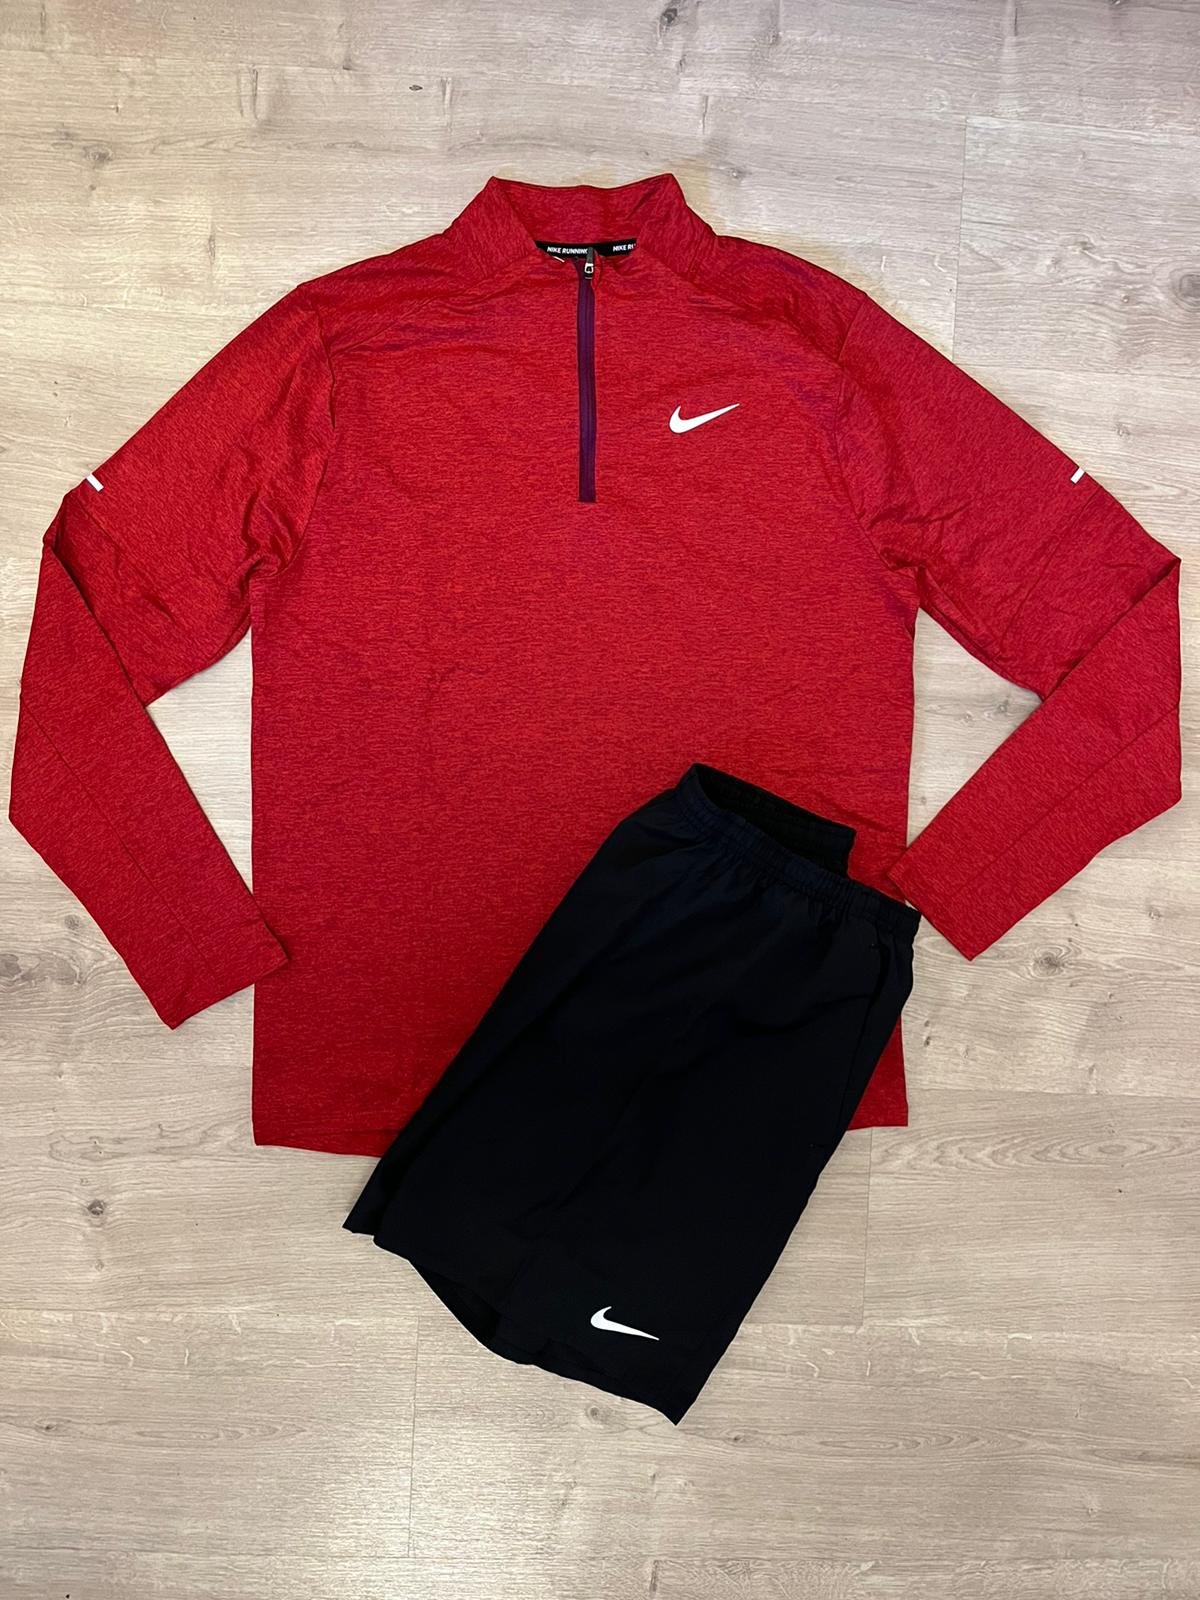 Nike Dri Fit Shorts Set - 1/4 Zip Red